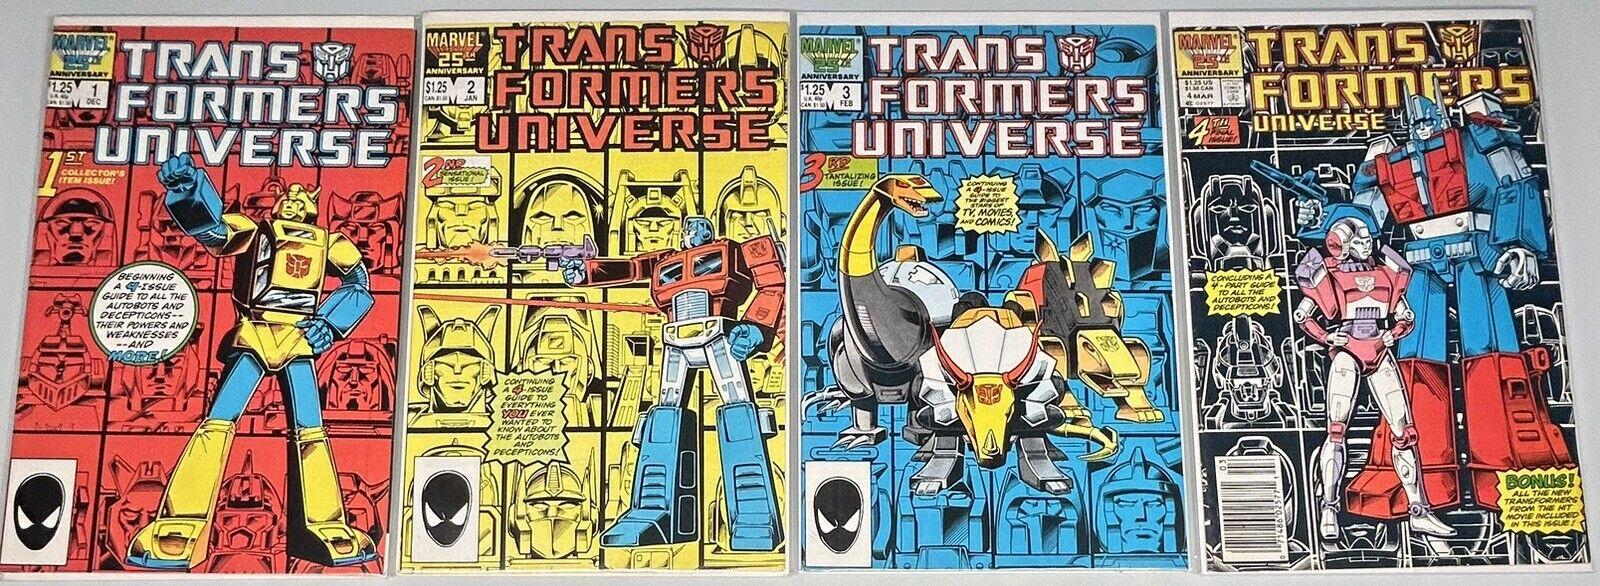 TRANSFORMERS UNIVERSE #1-4 FULL  SET 1986 MARVEL COMICS